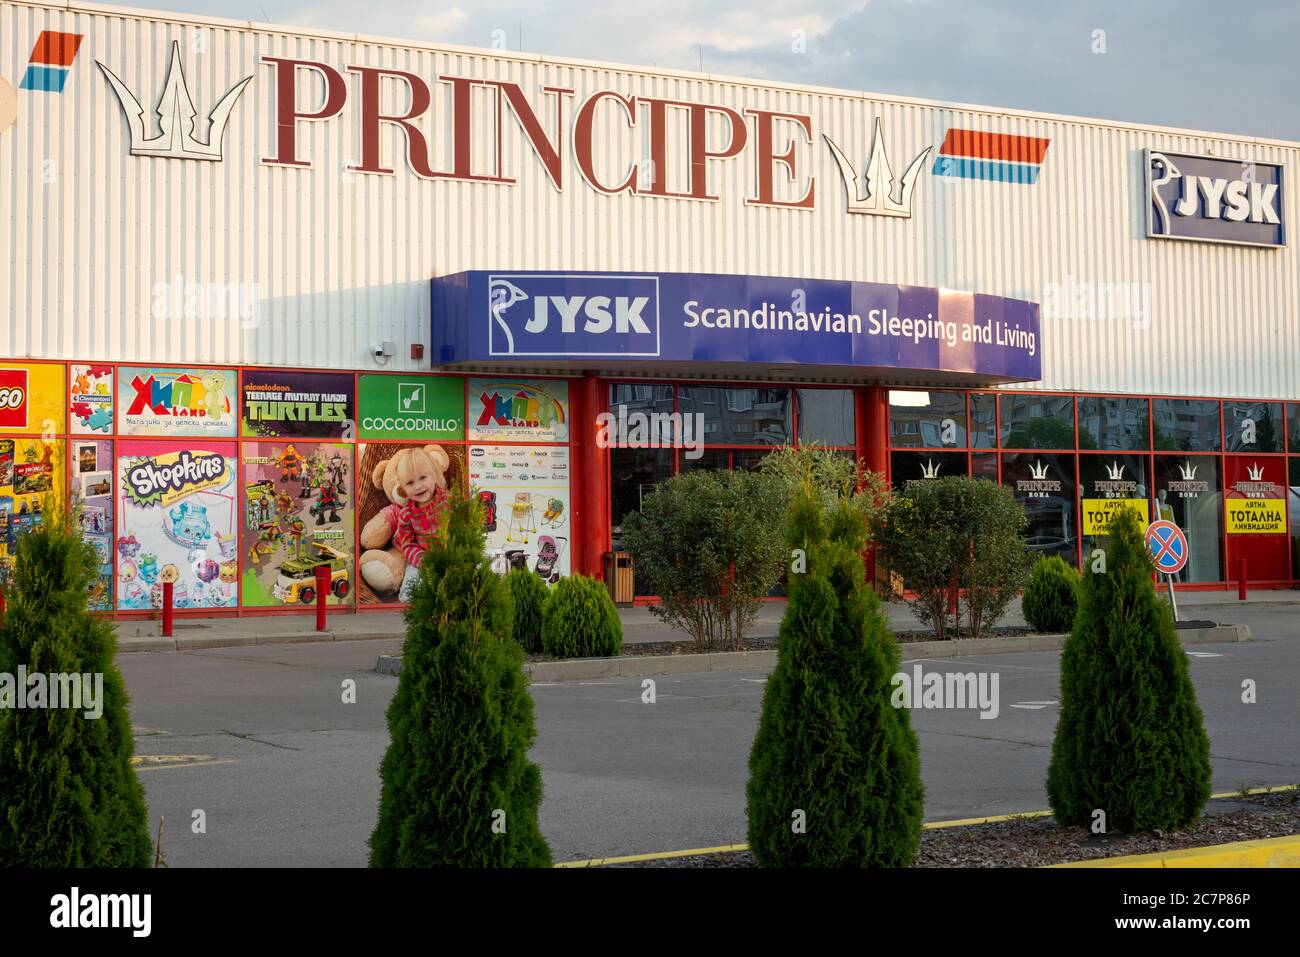 Principe logo and Jysk Scandinavian Sleeping and Living home furnishing store shop front facade in Sofia Bulgaria Stock Photo